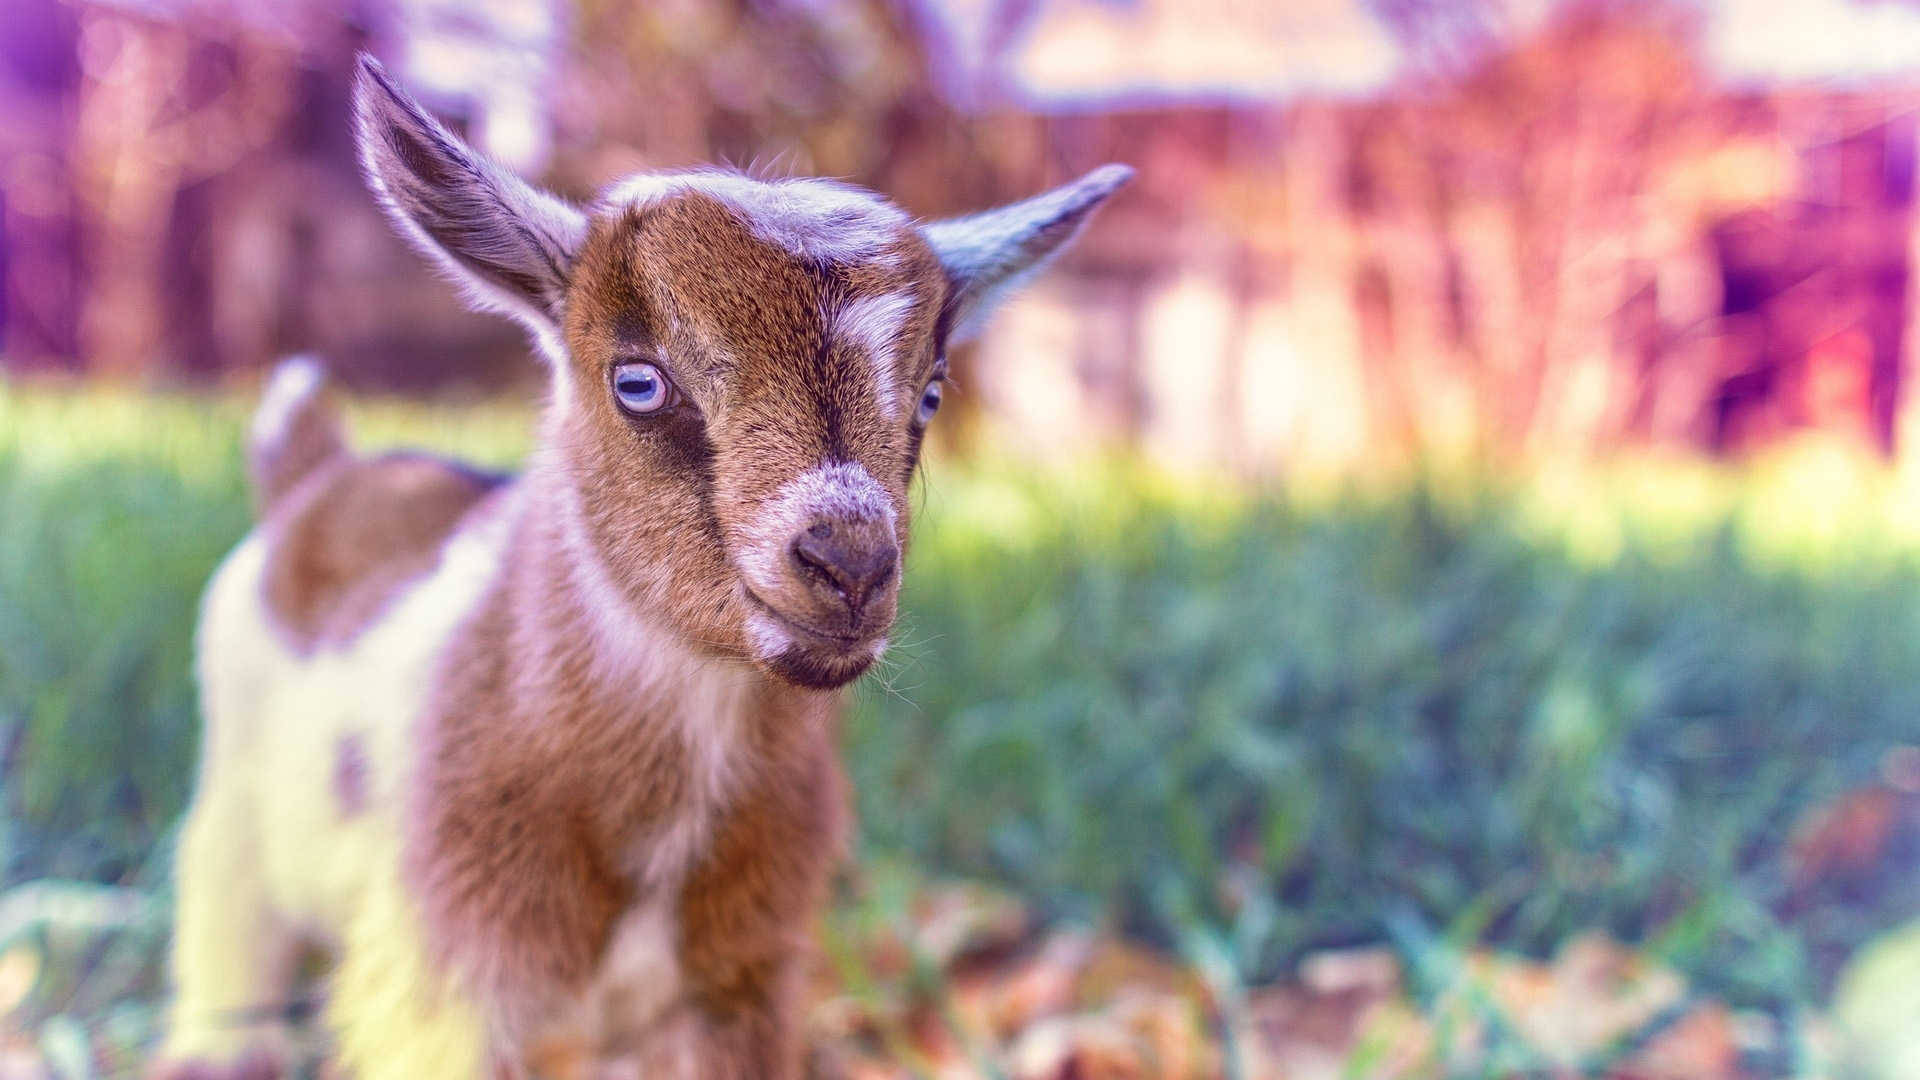 Blue-eyed Baby Goat Wallpaper